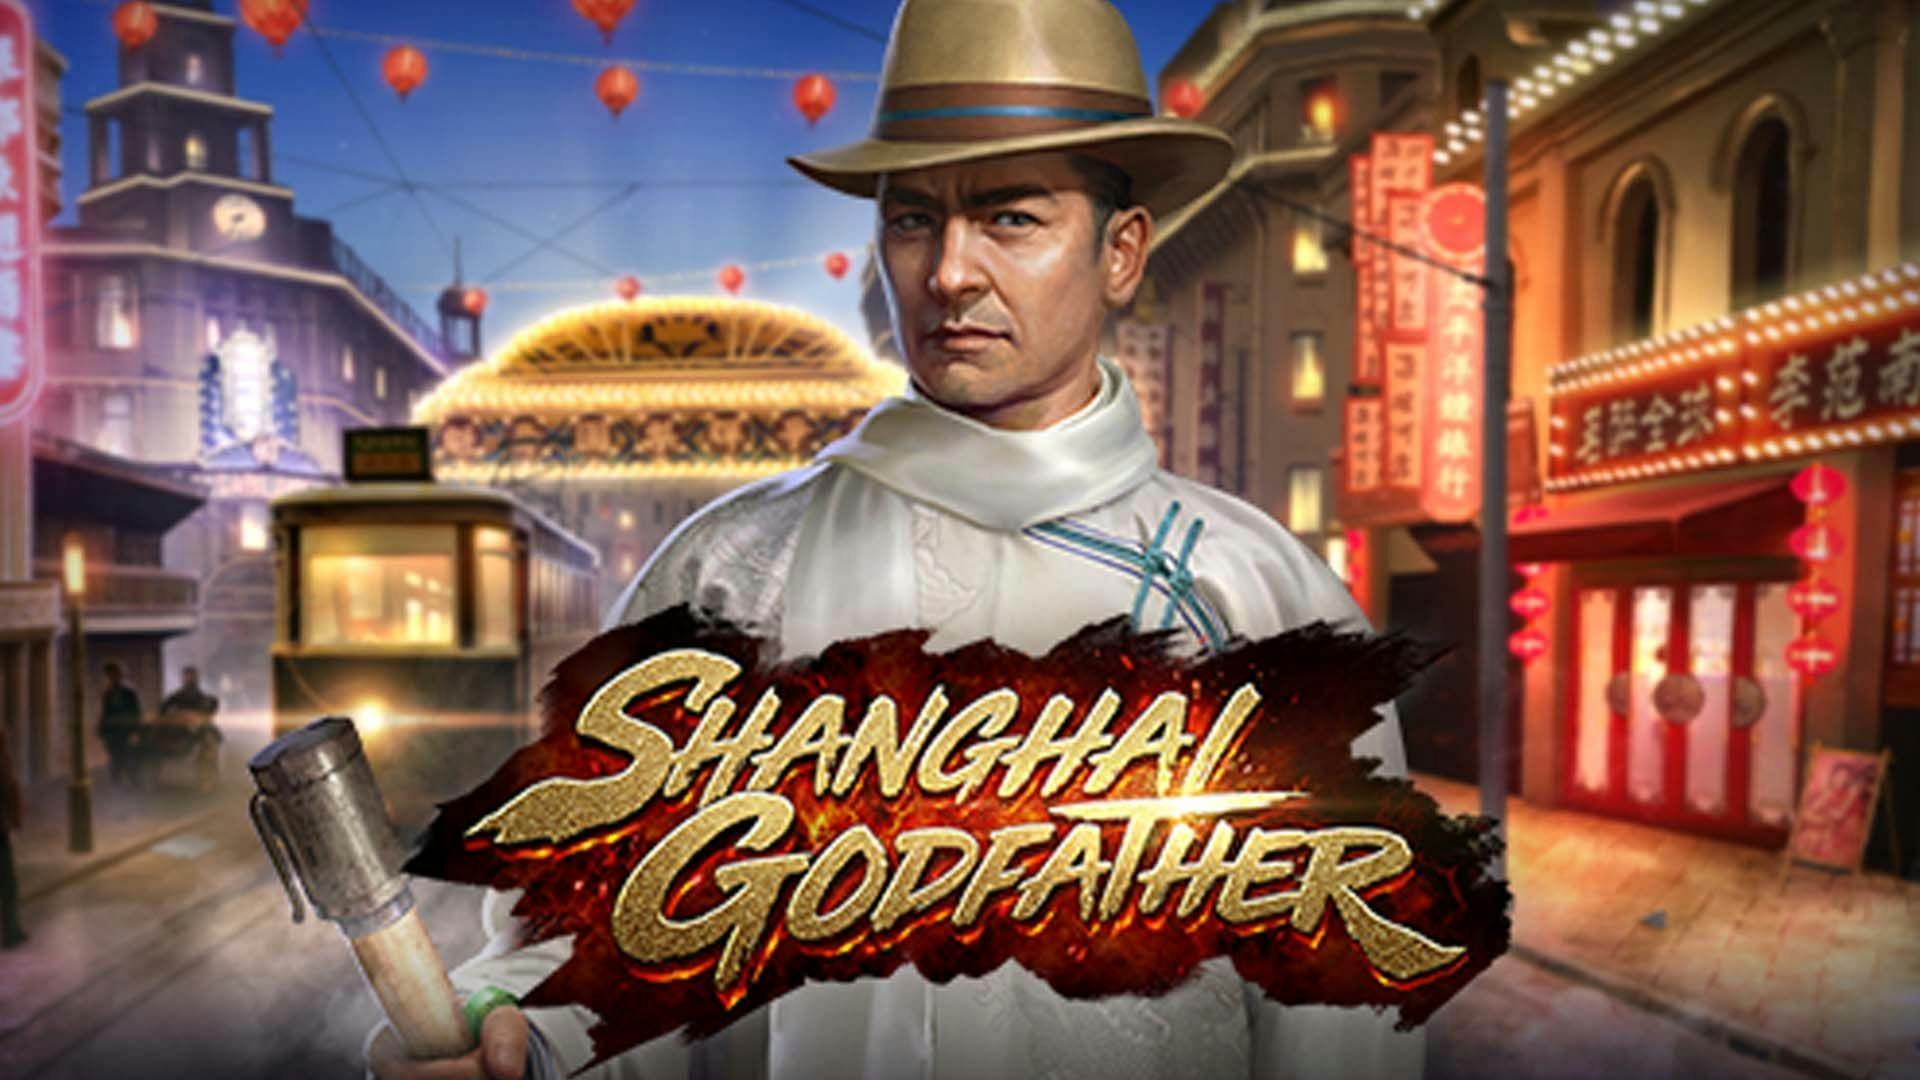 Shanghai Godfather Slot Machine Online Free Game Play